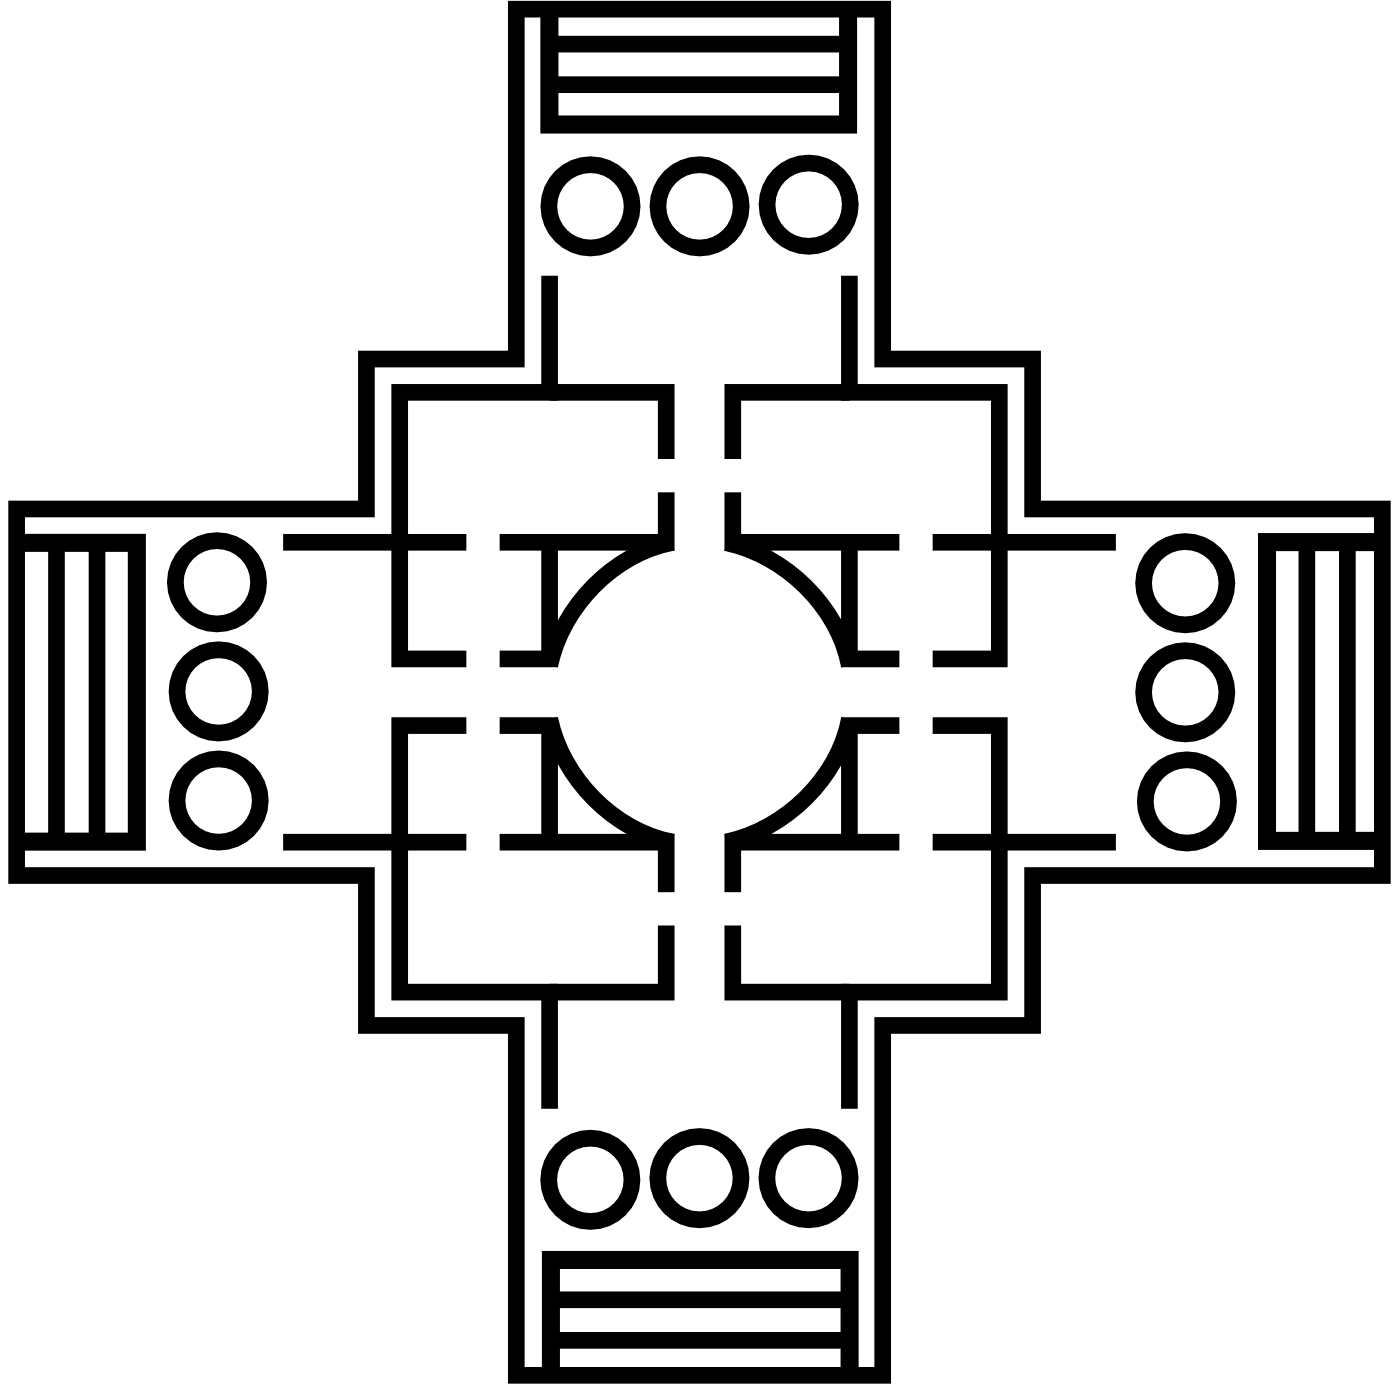 Palladio Logo